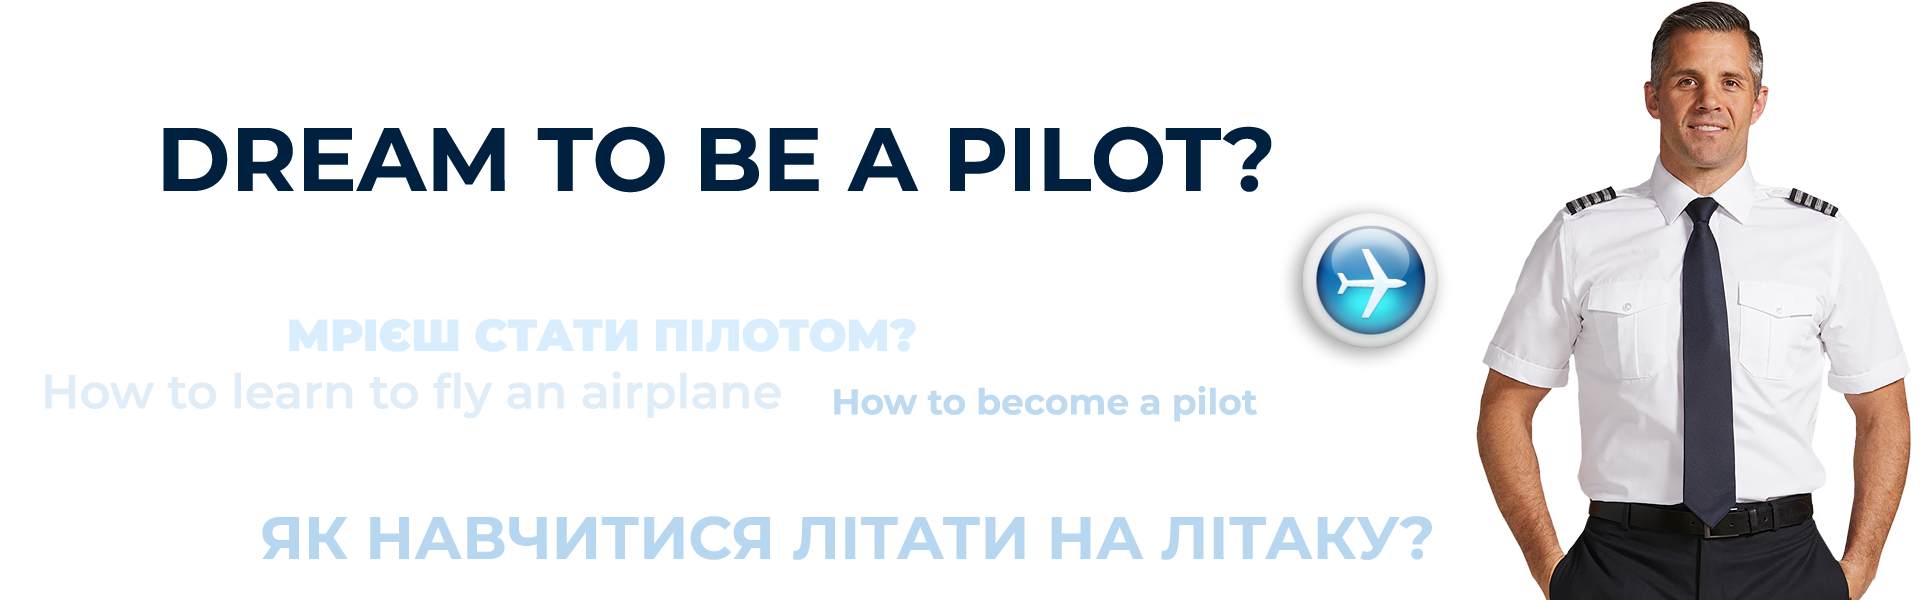 drem-to-be-a-pilot-ua.png